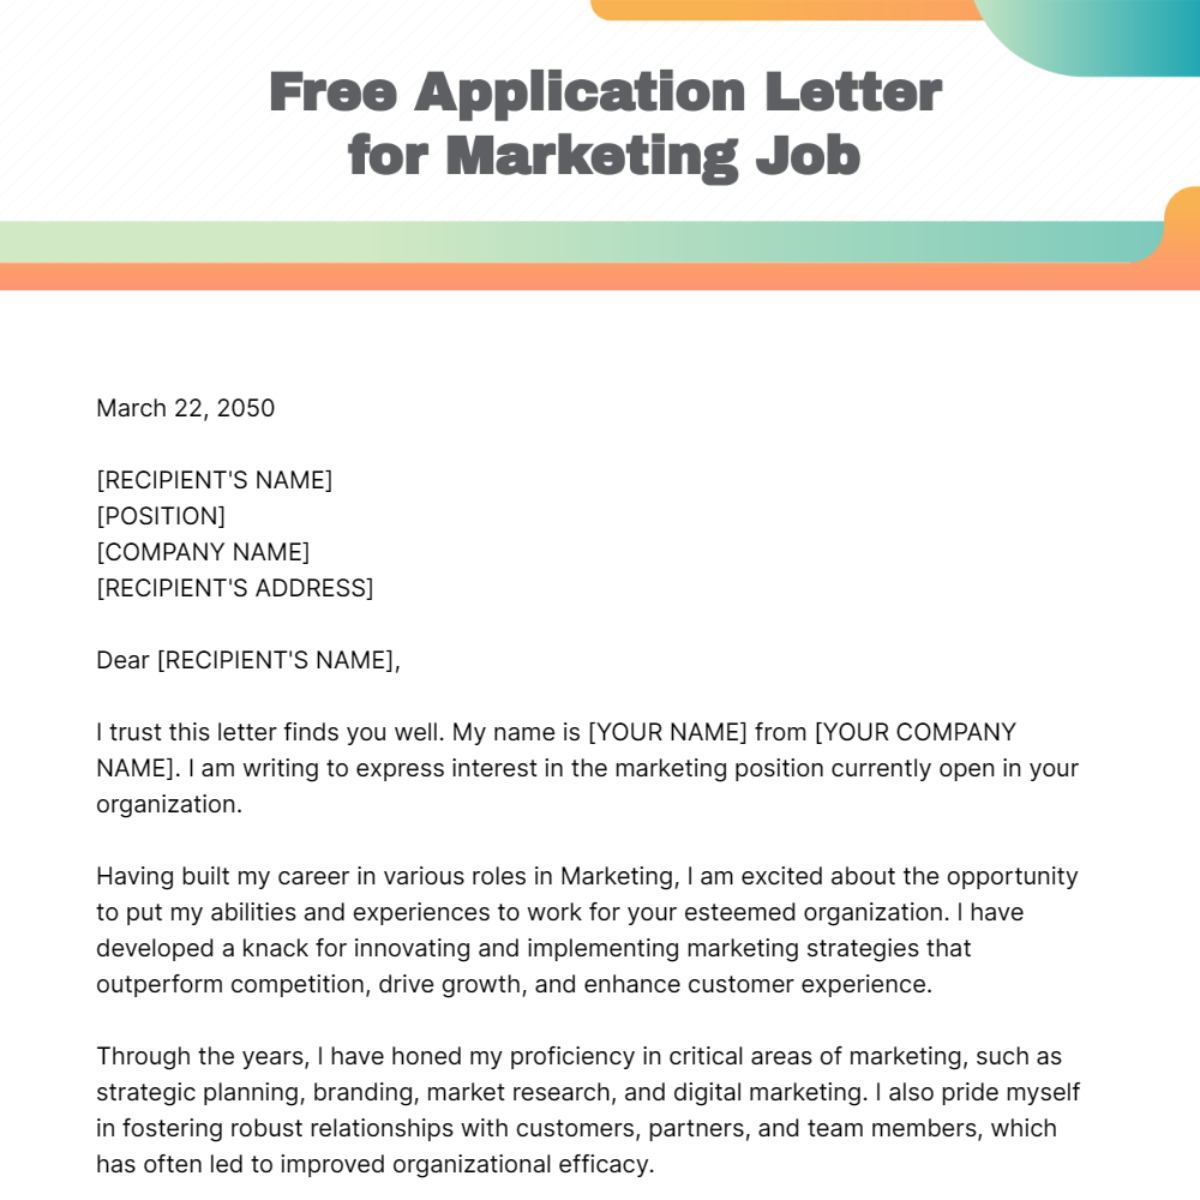 Application Letter for Marketing Job Template